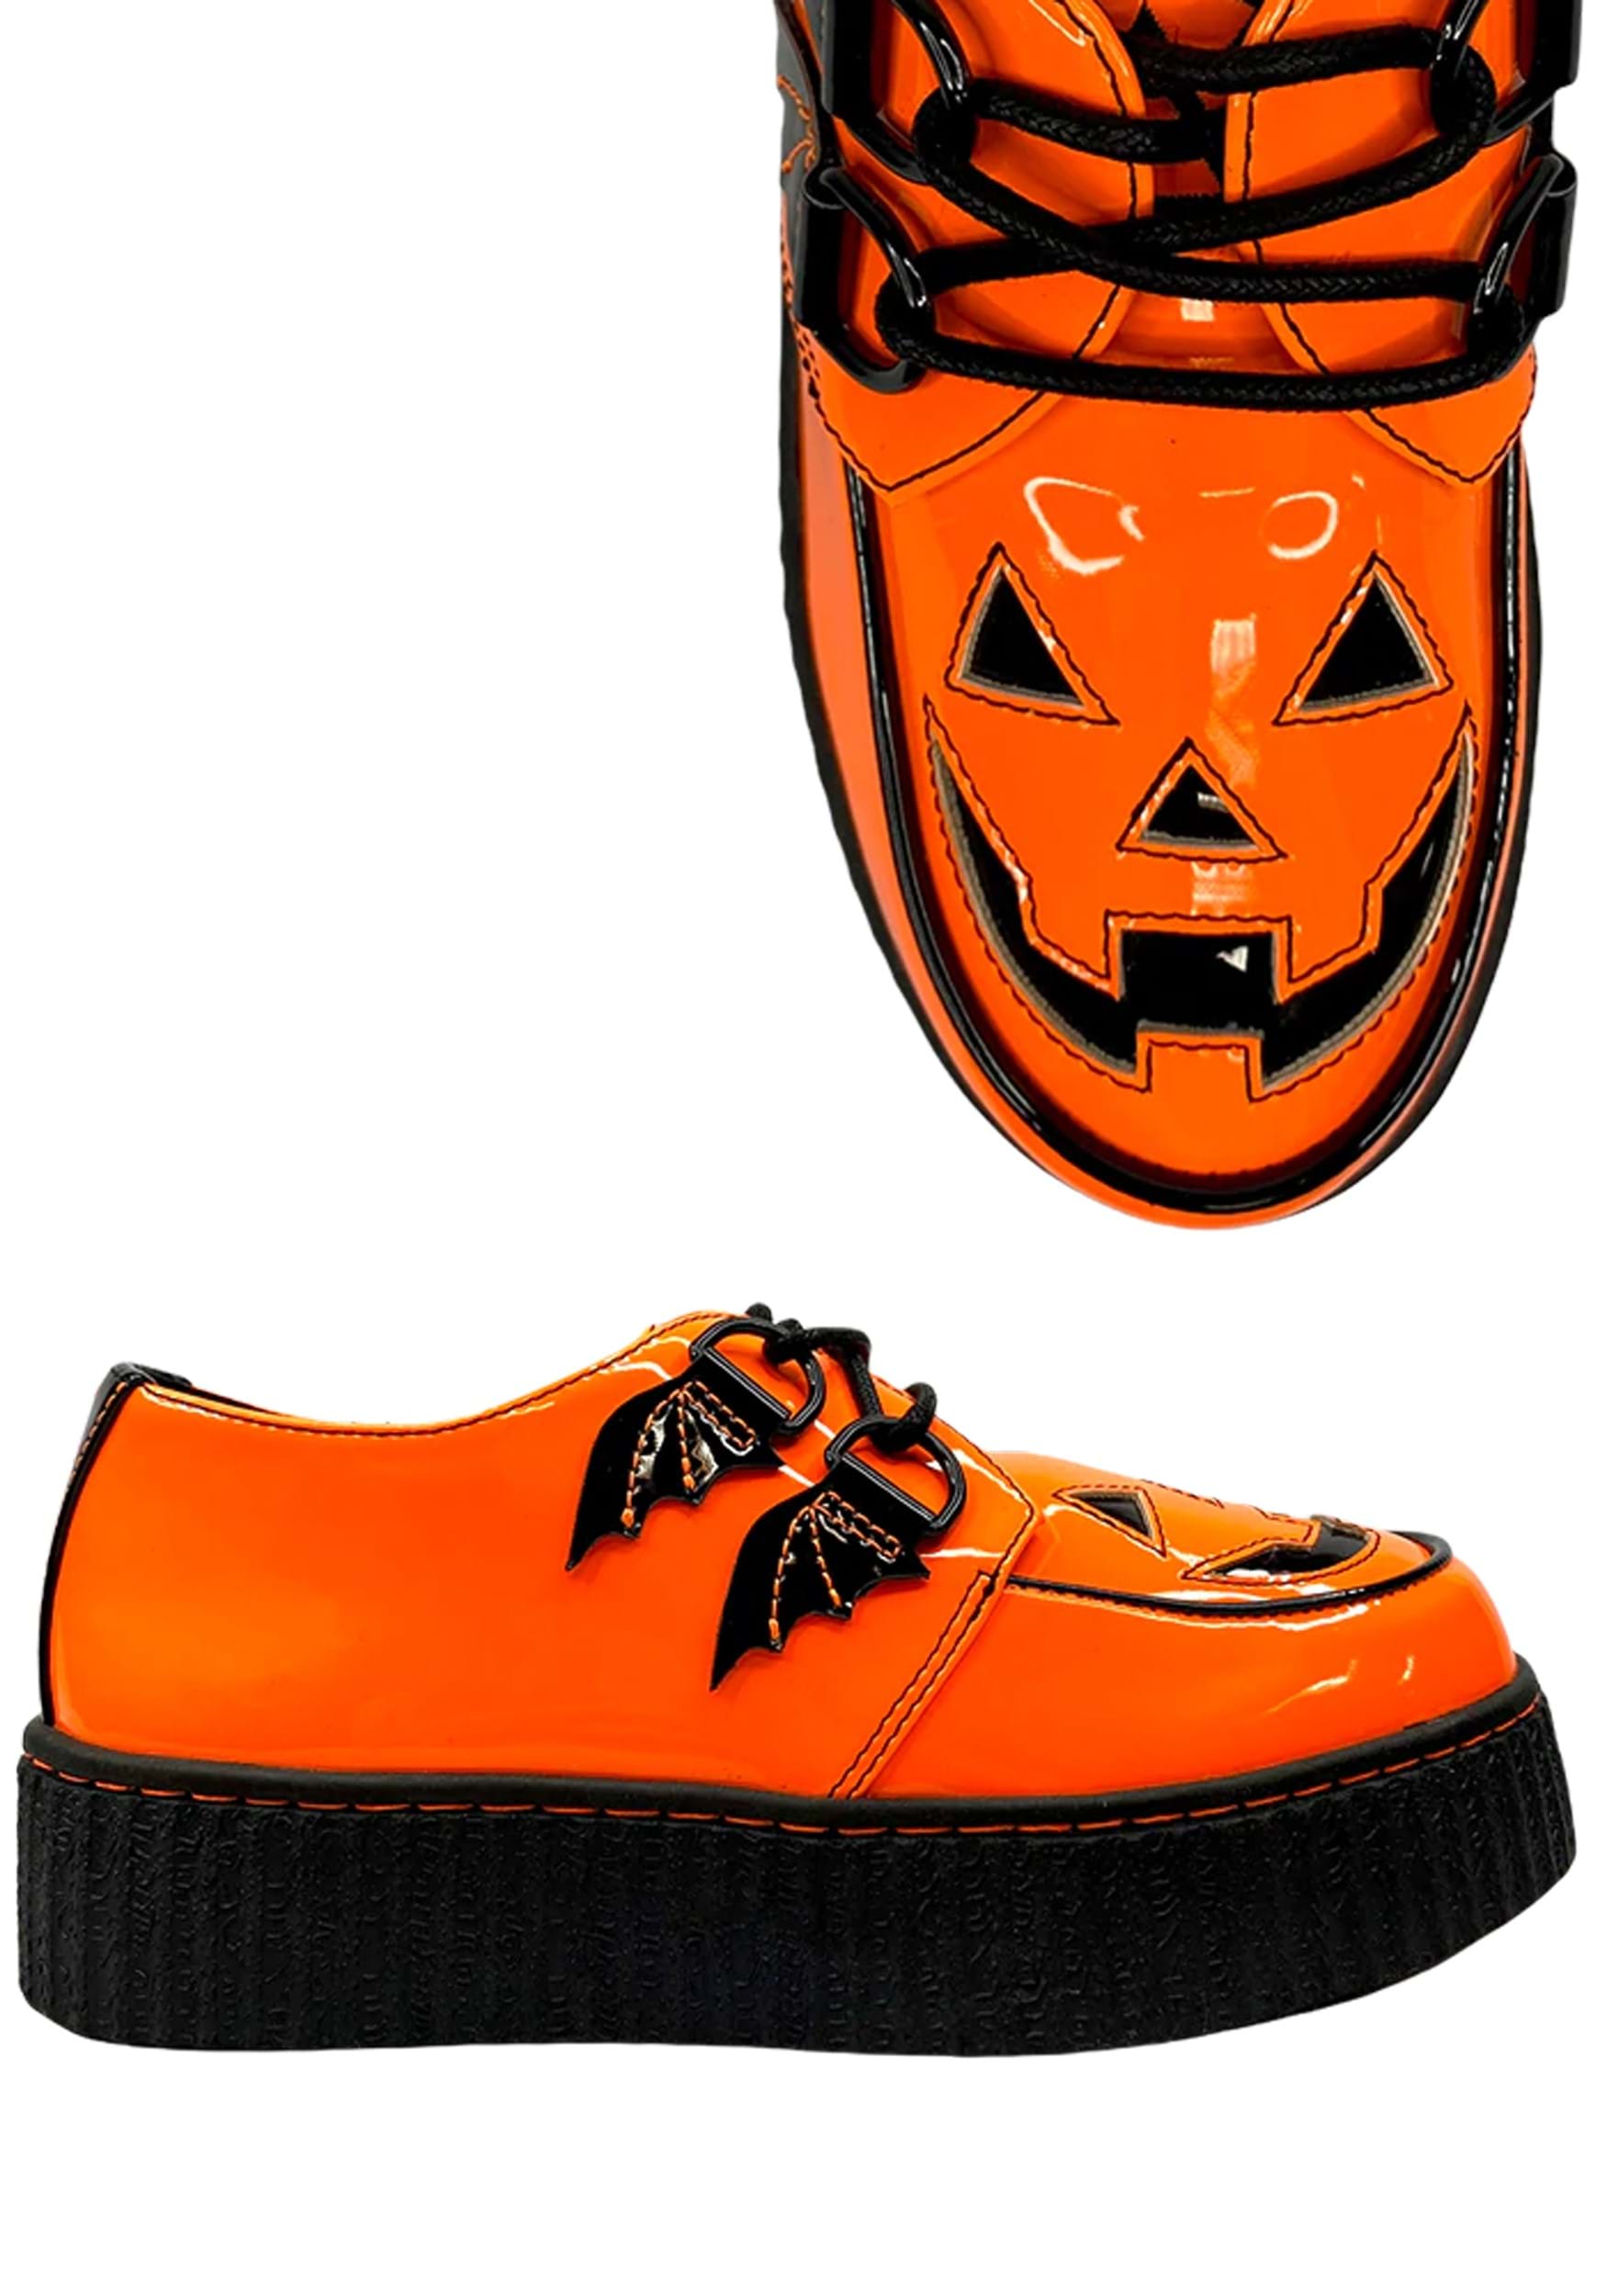 Image of Patent Orange Jack O' Lantern Creeper Shoes ID SVKRYPTJACK-OR/BK-7